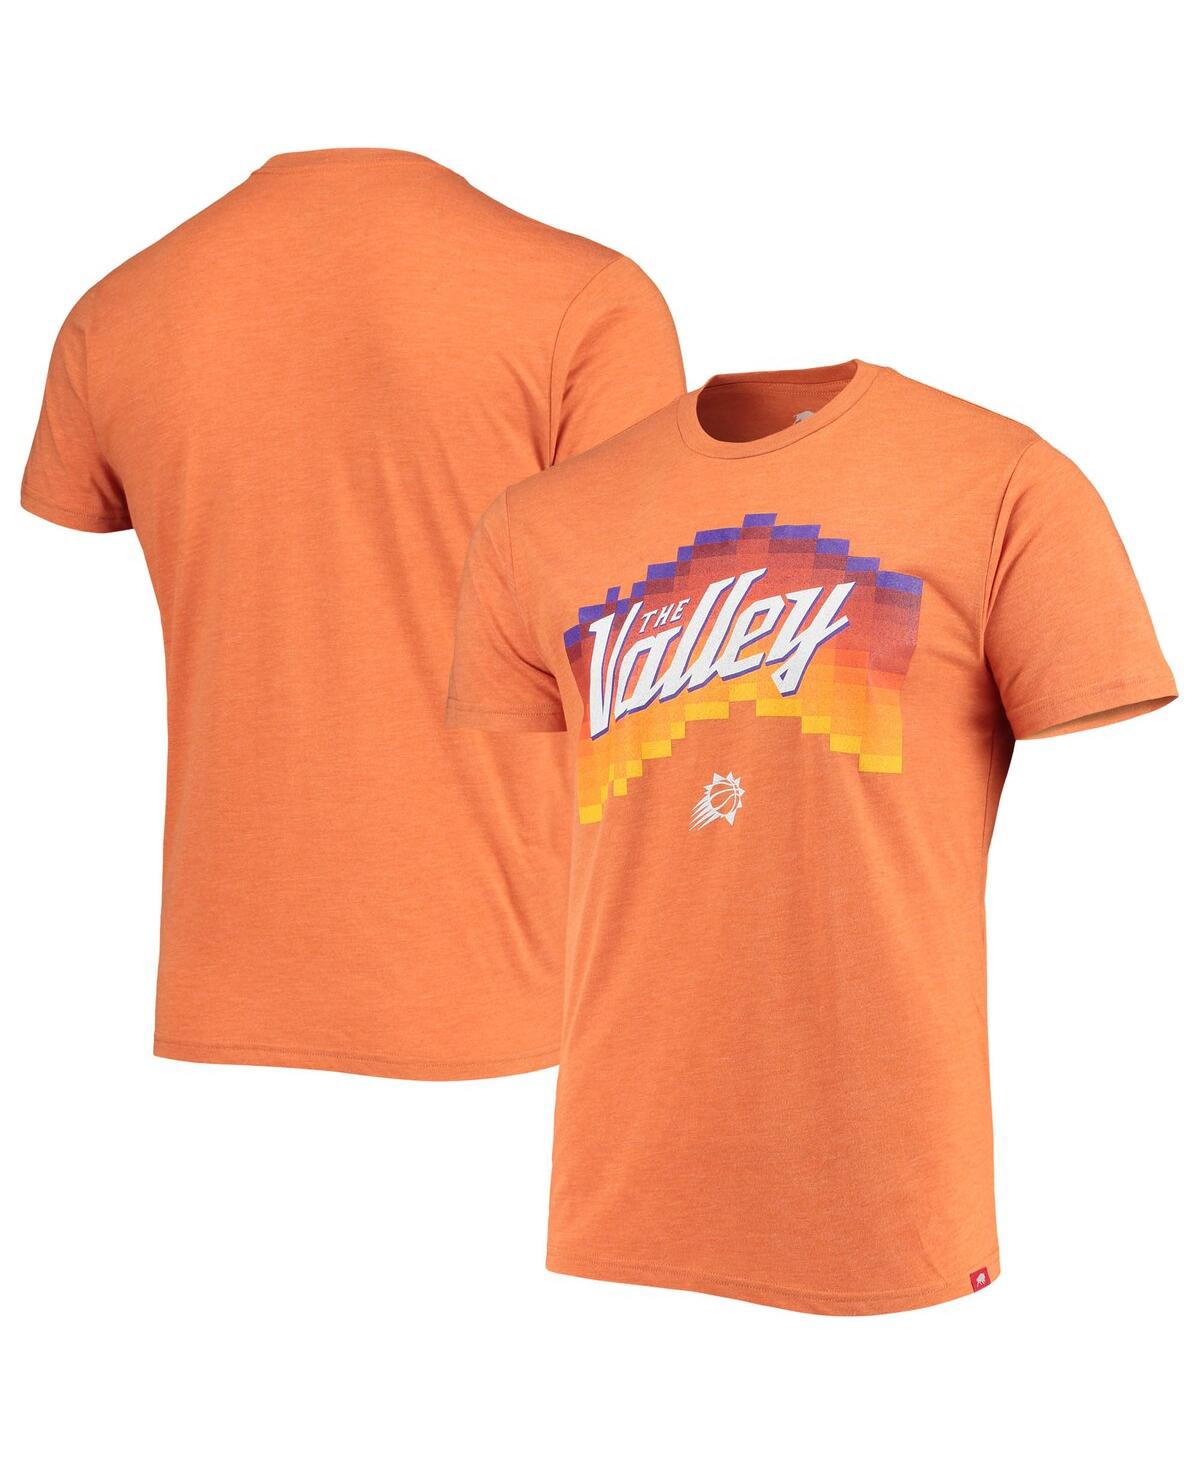 Men's Sportiqe Orange Phoenix Suns The Valley Pixel City Edition Tri-Blend T-shirt - Orange